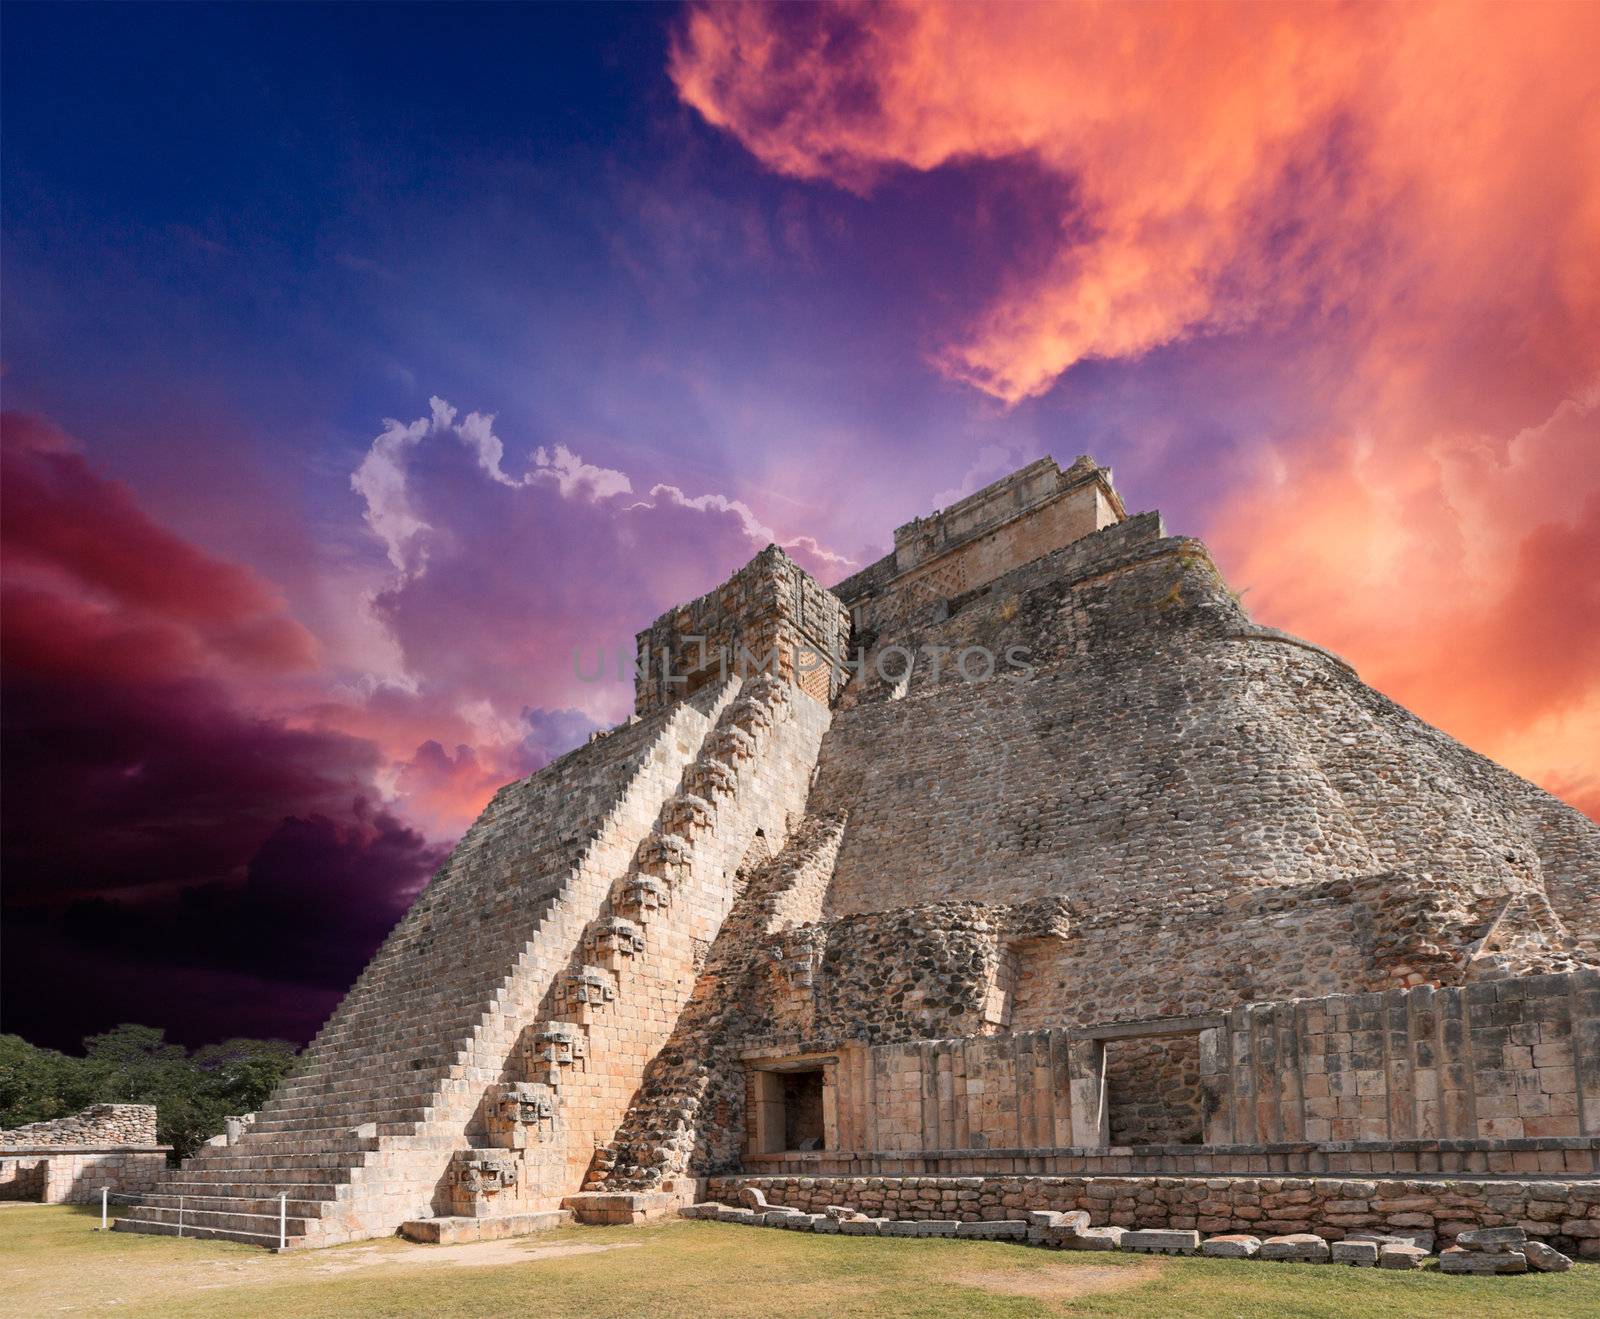 Mayan pyramid in Uxmal, Mexico by dimol